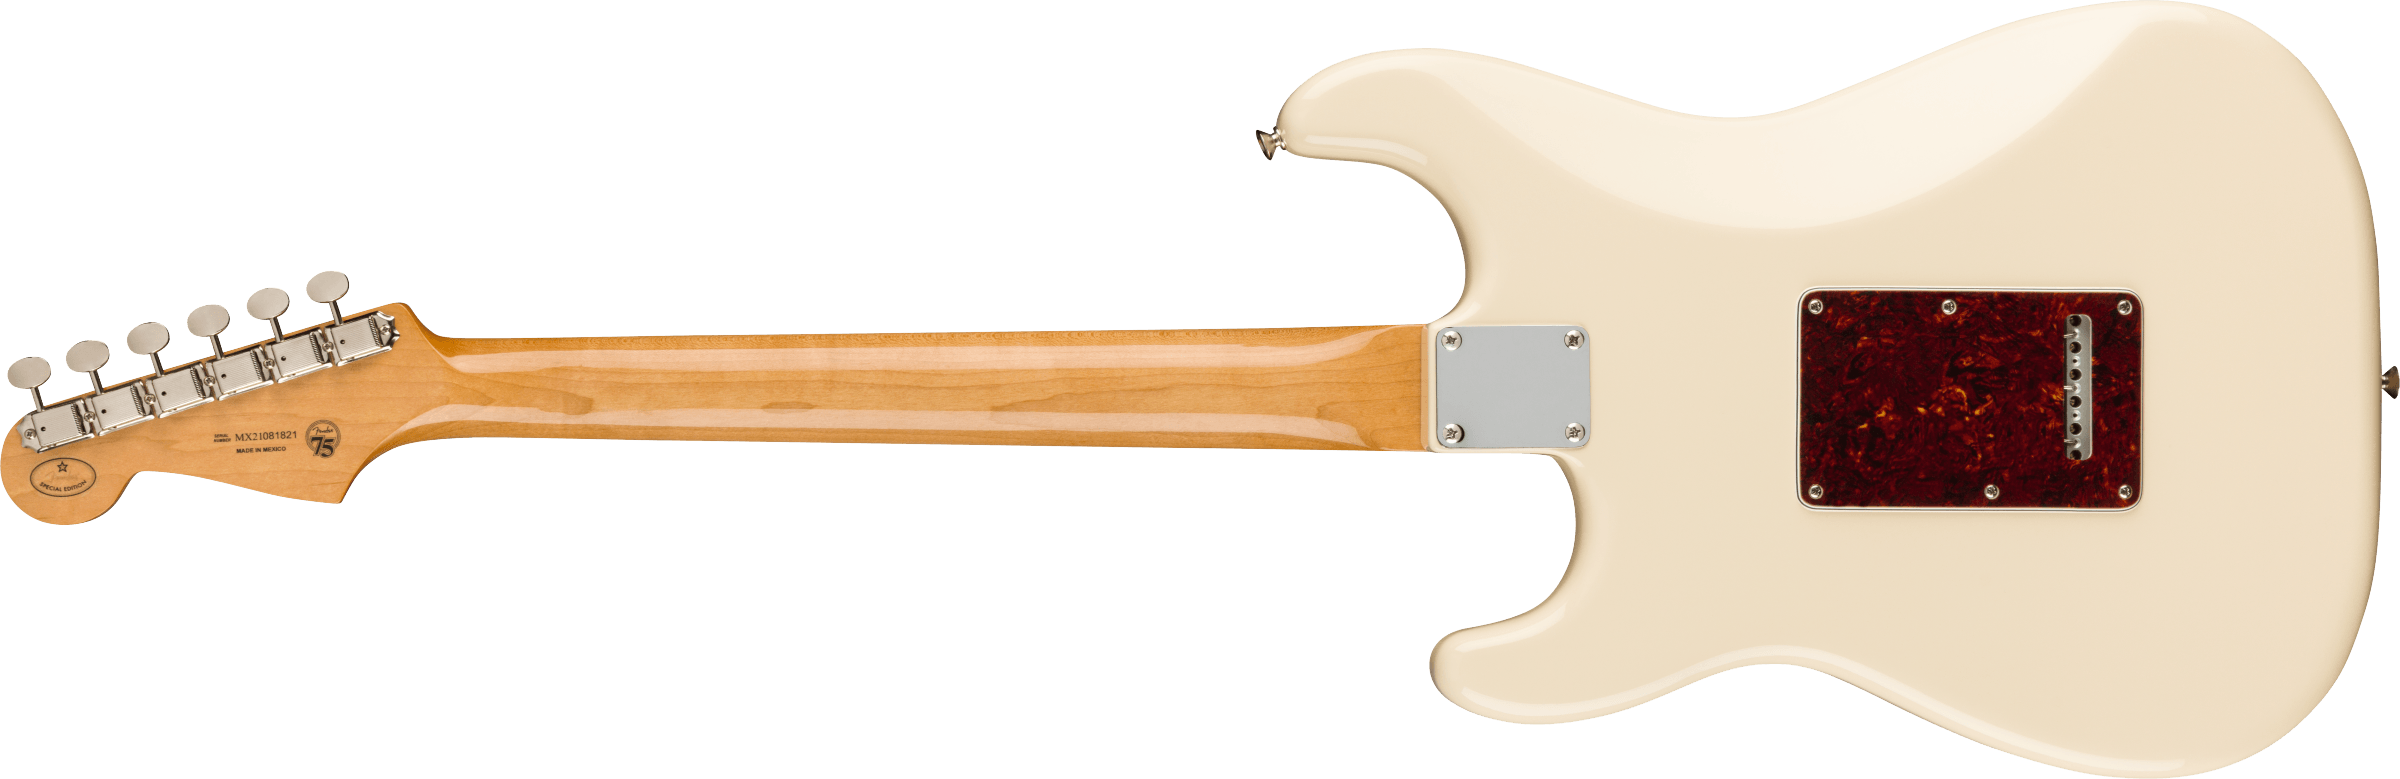 Fender Strat 60s Vintera Ltd Mex Pf - Olympic White - Guitarra eléctrica con forma de str. - Variation 1